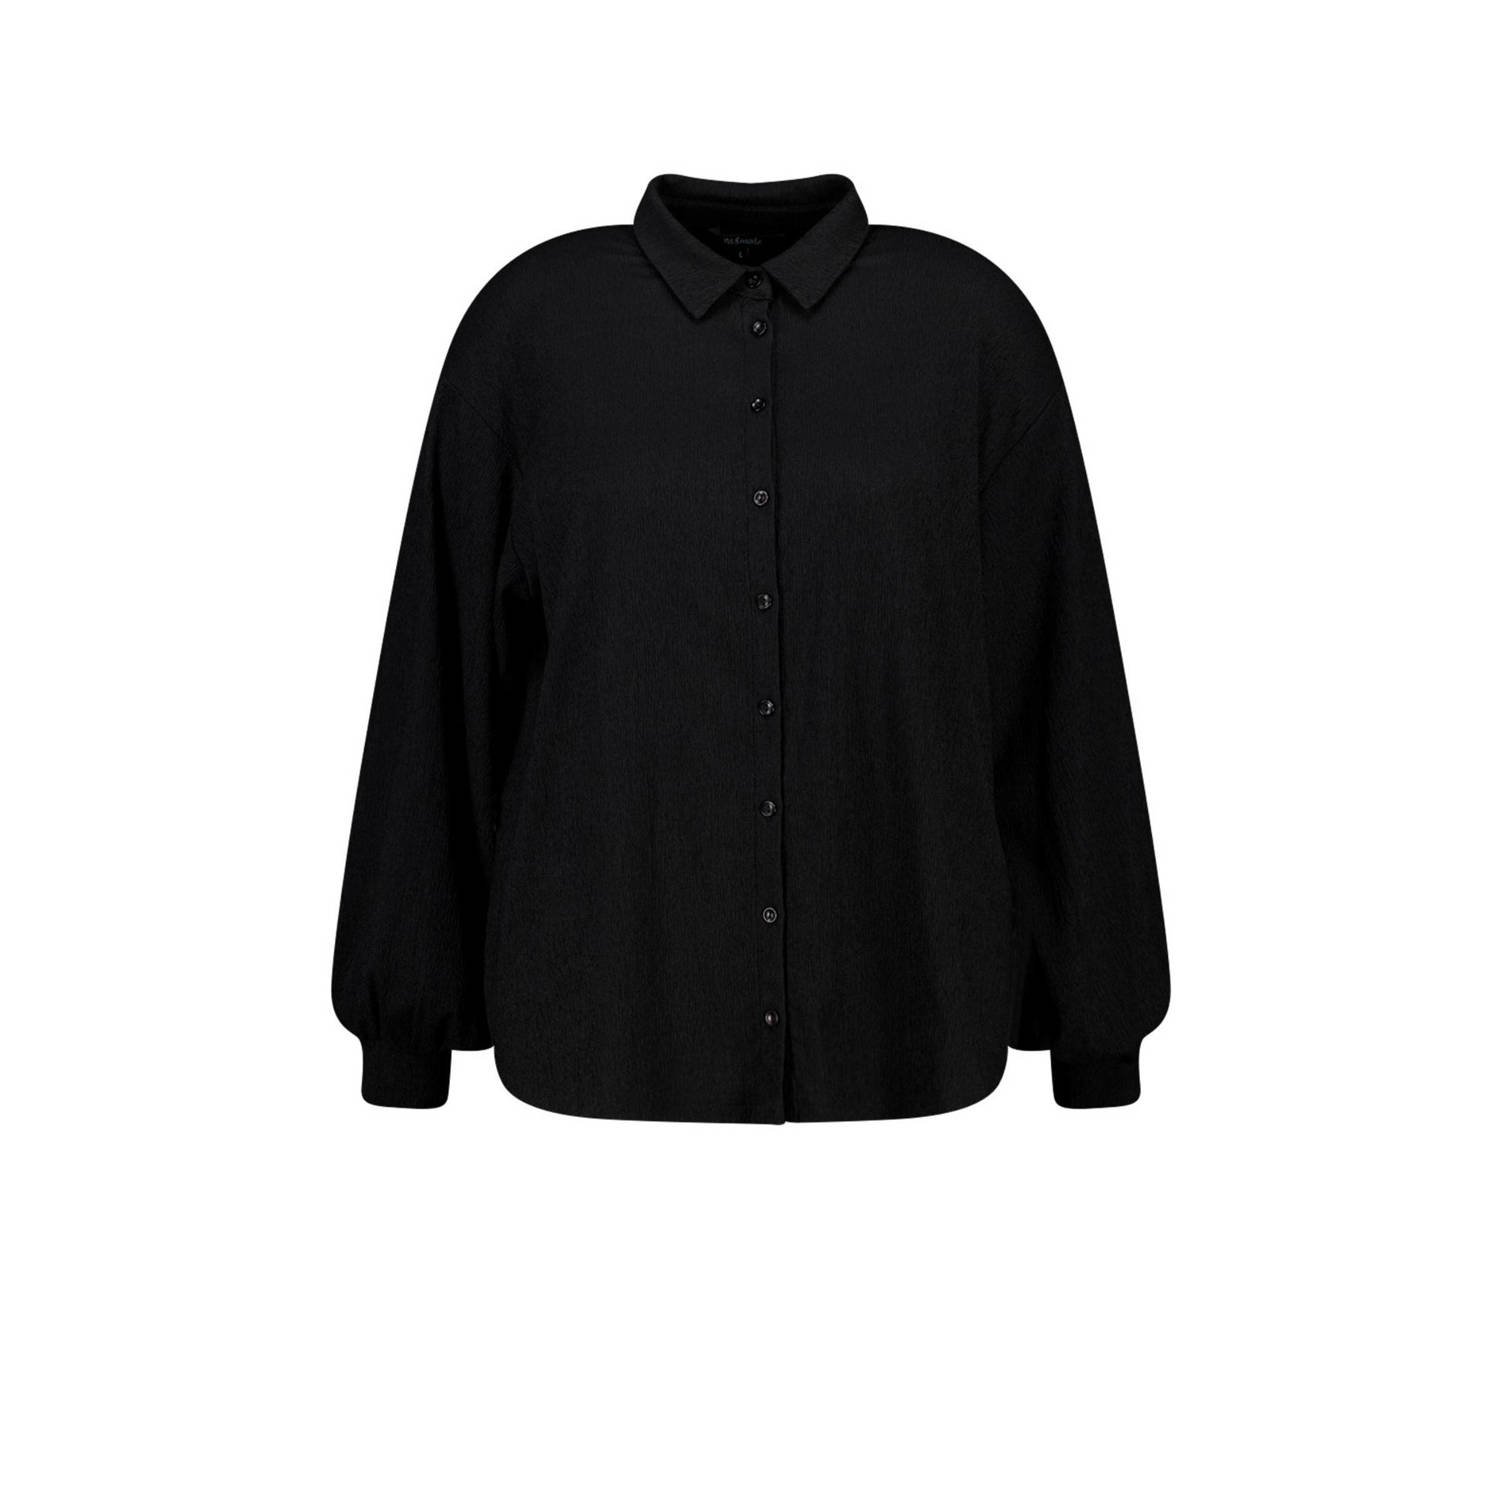 MS Mode blouse zwart